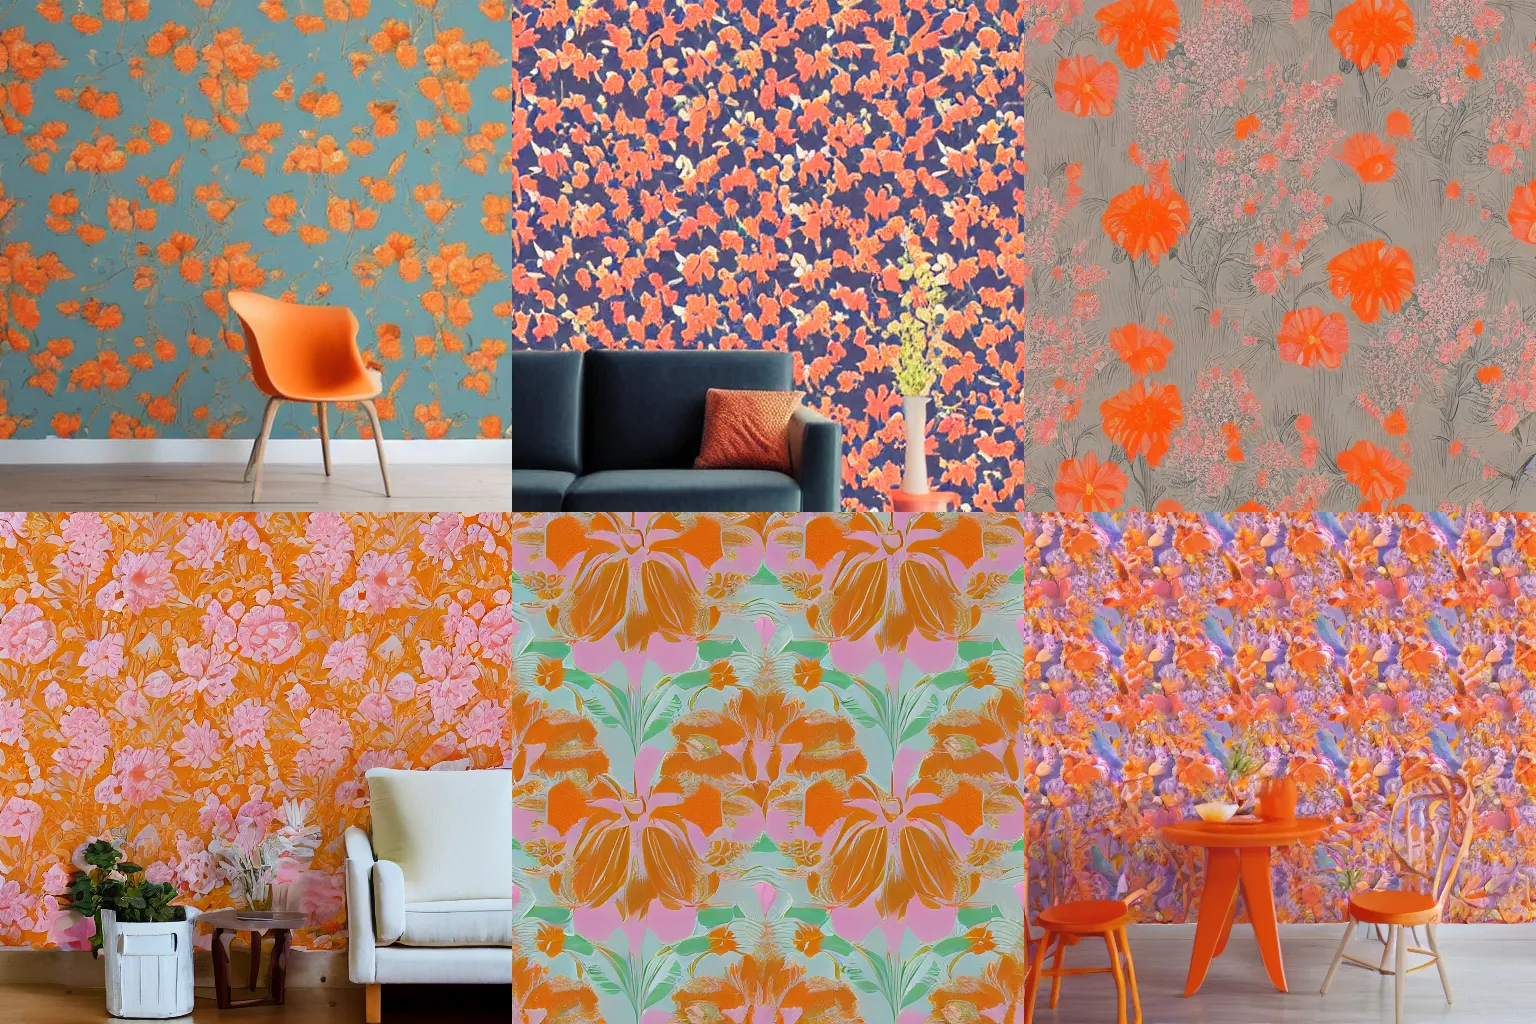 Prompt: floral wallpaper with orange pastel colors